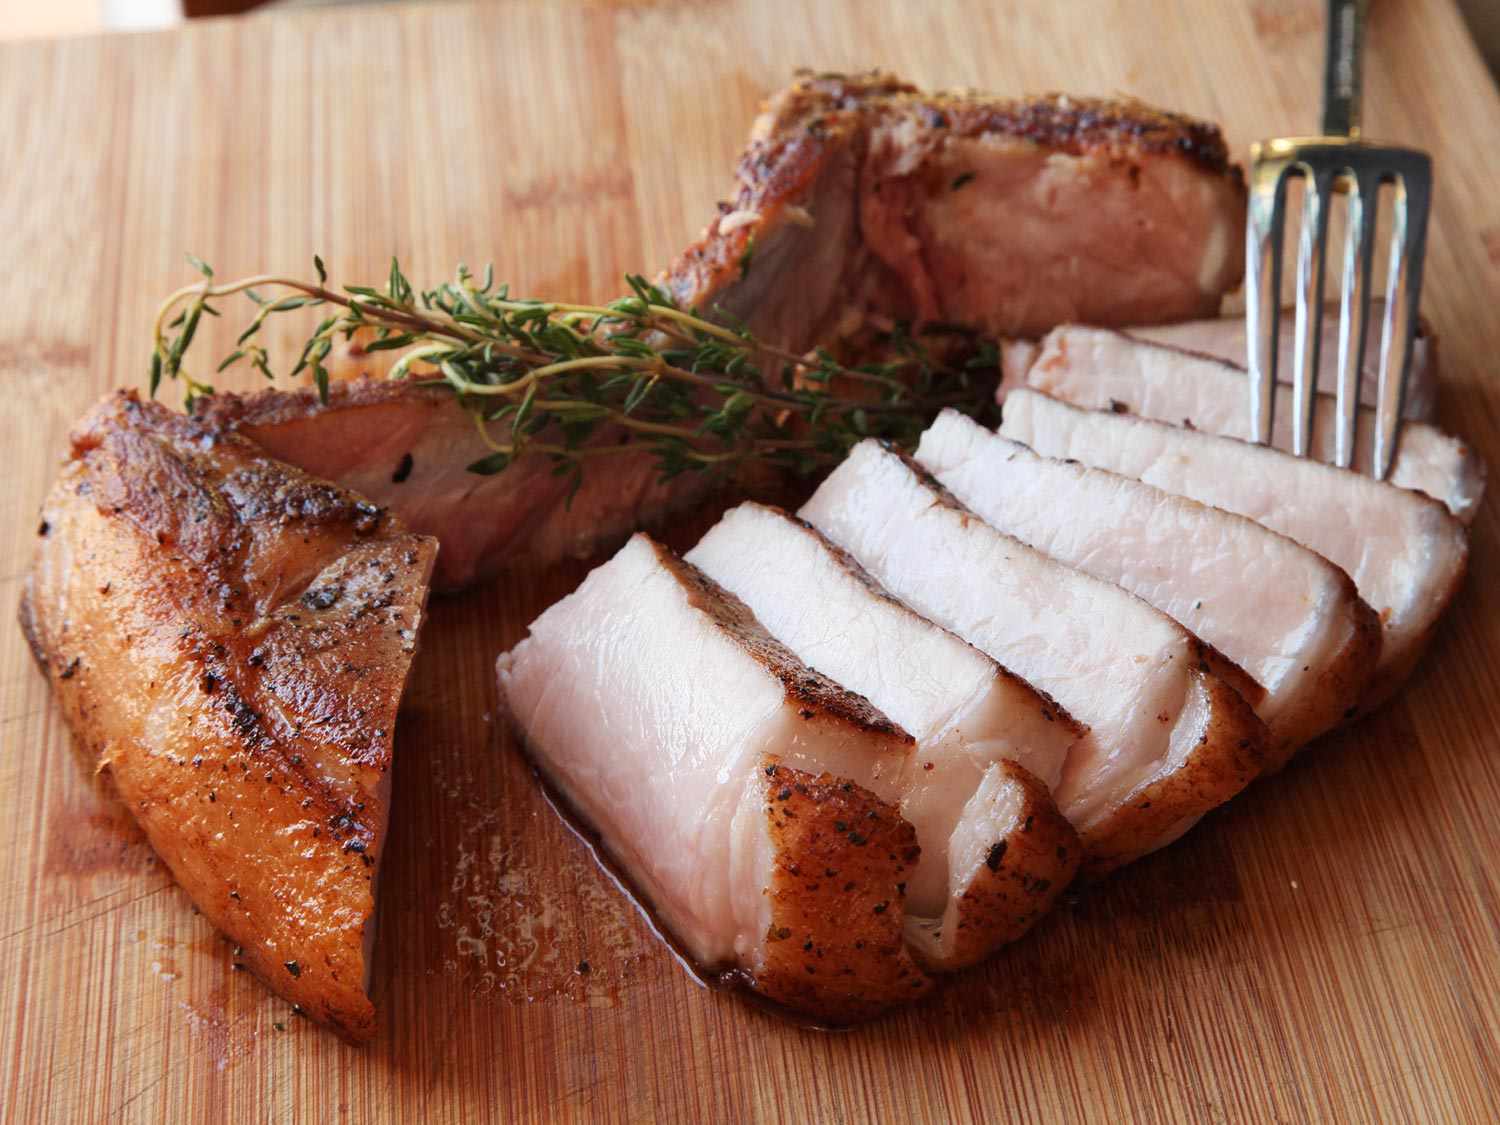 Sliced sous vide pork chops on a cutting board.